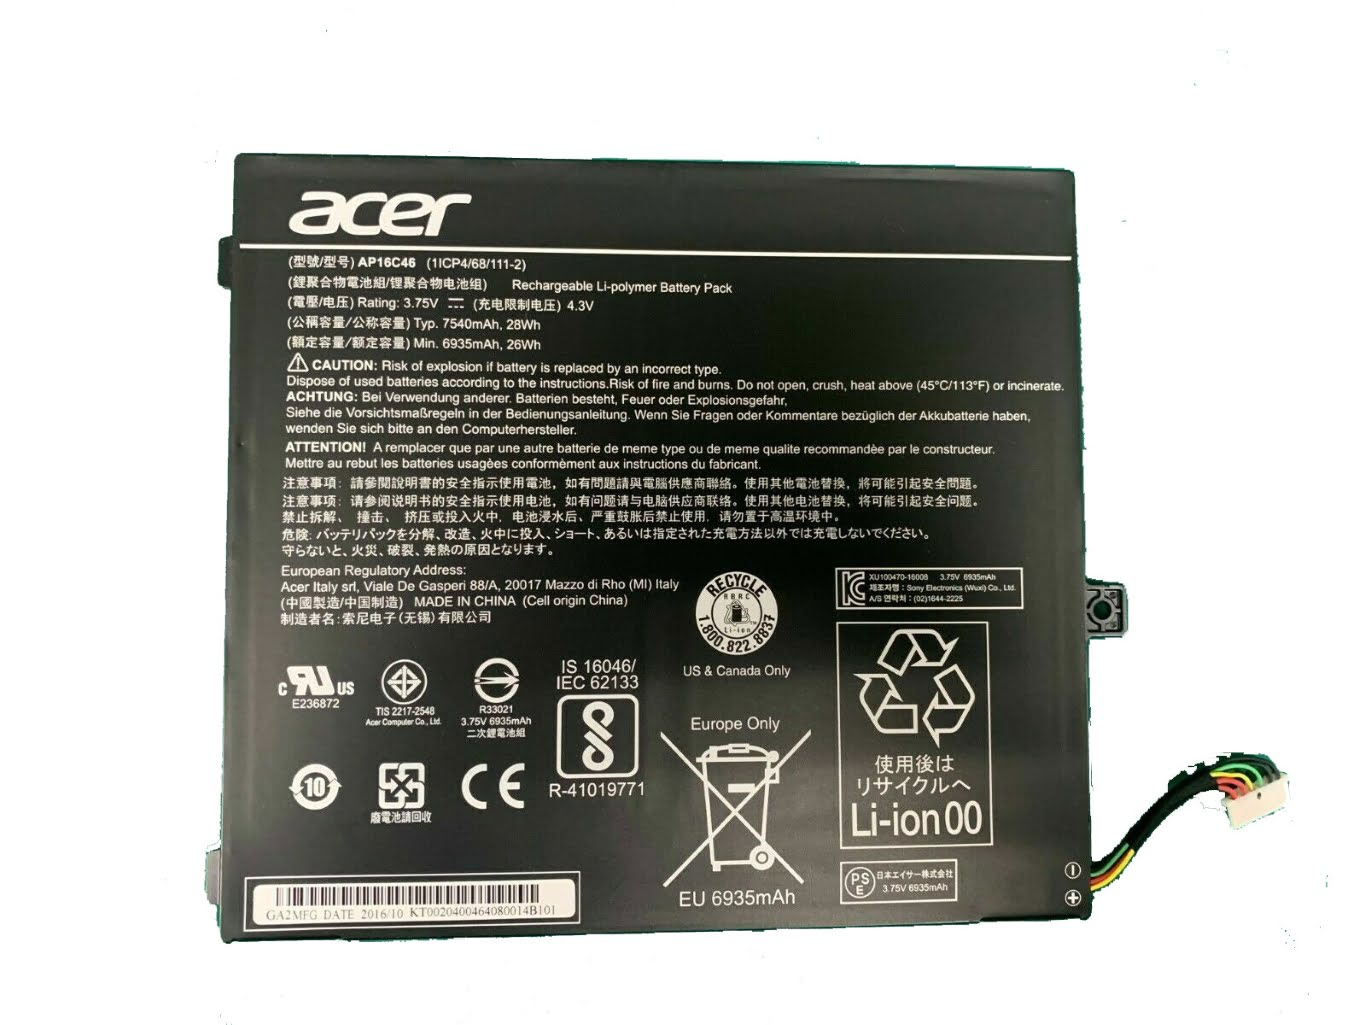 AP16C46, KT.00204.004 replacement Laptop Battery for Acer Aspire E5-573, Interruptor SW5-017-17BU, 3.75v, 7540mah / 28wh, 2 cells